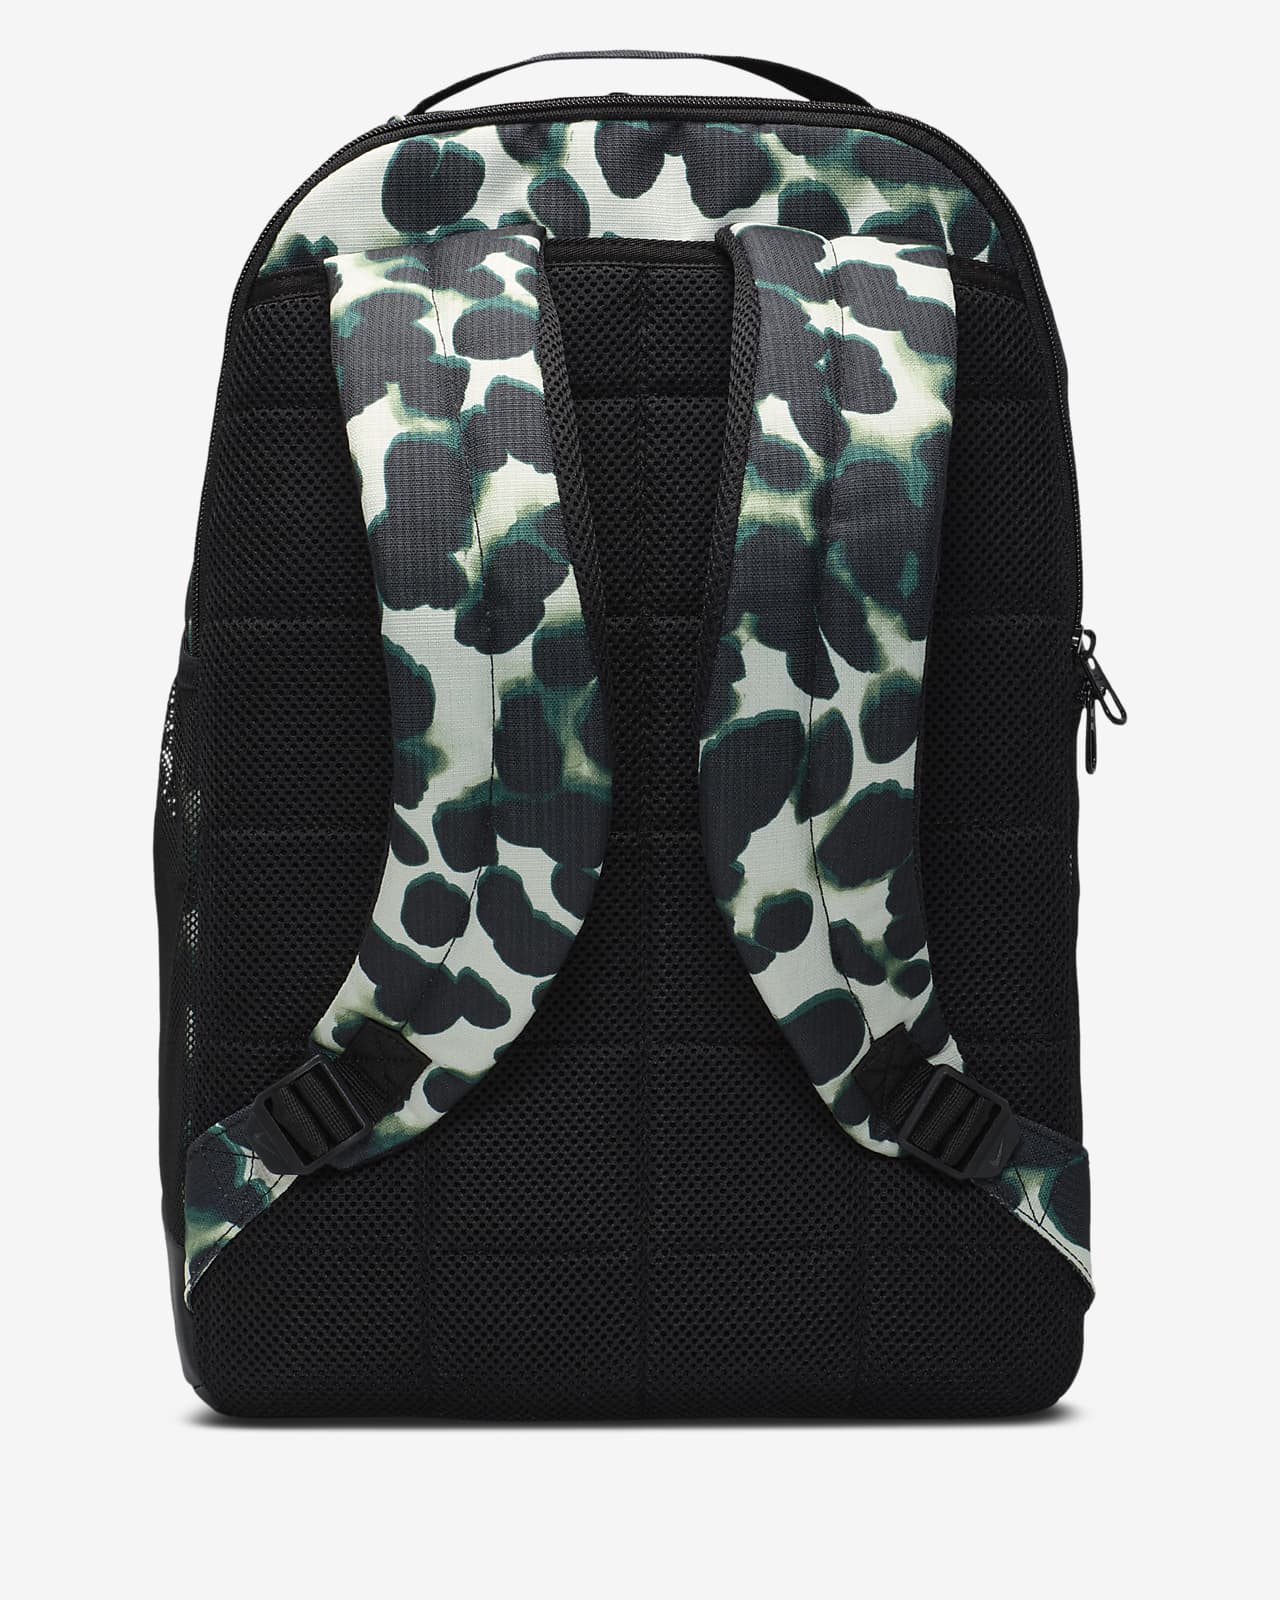 Nike Brasilia 9.0 Backpack Camo Printed Fits 15 Laptop mesh pocket 24 or  30 L